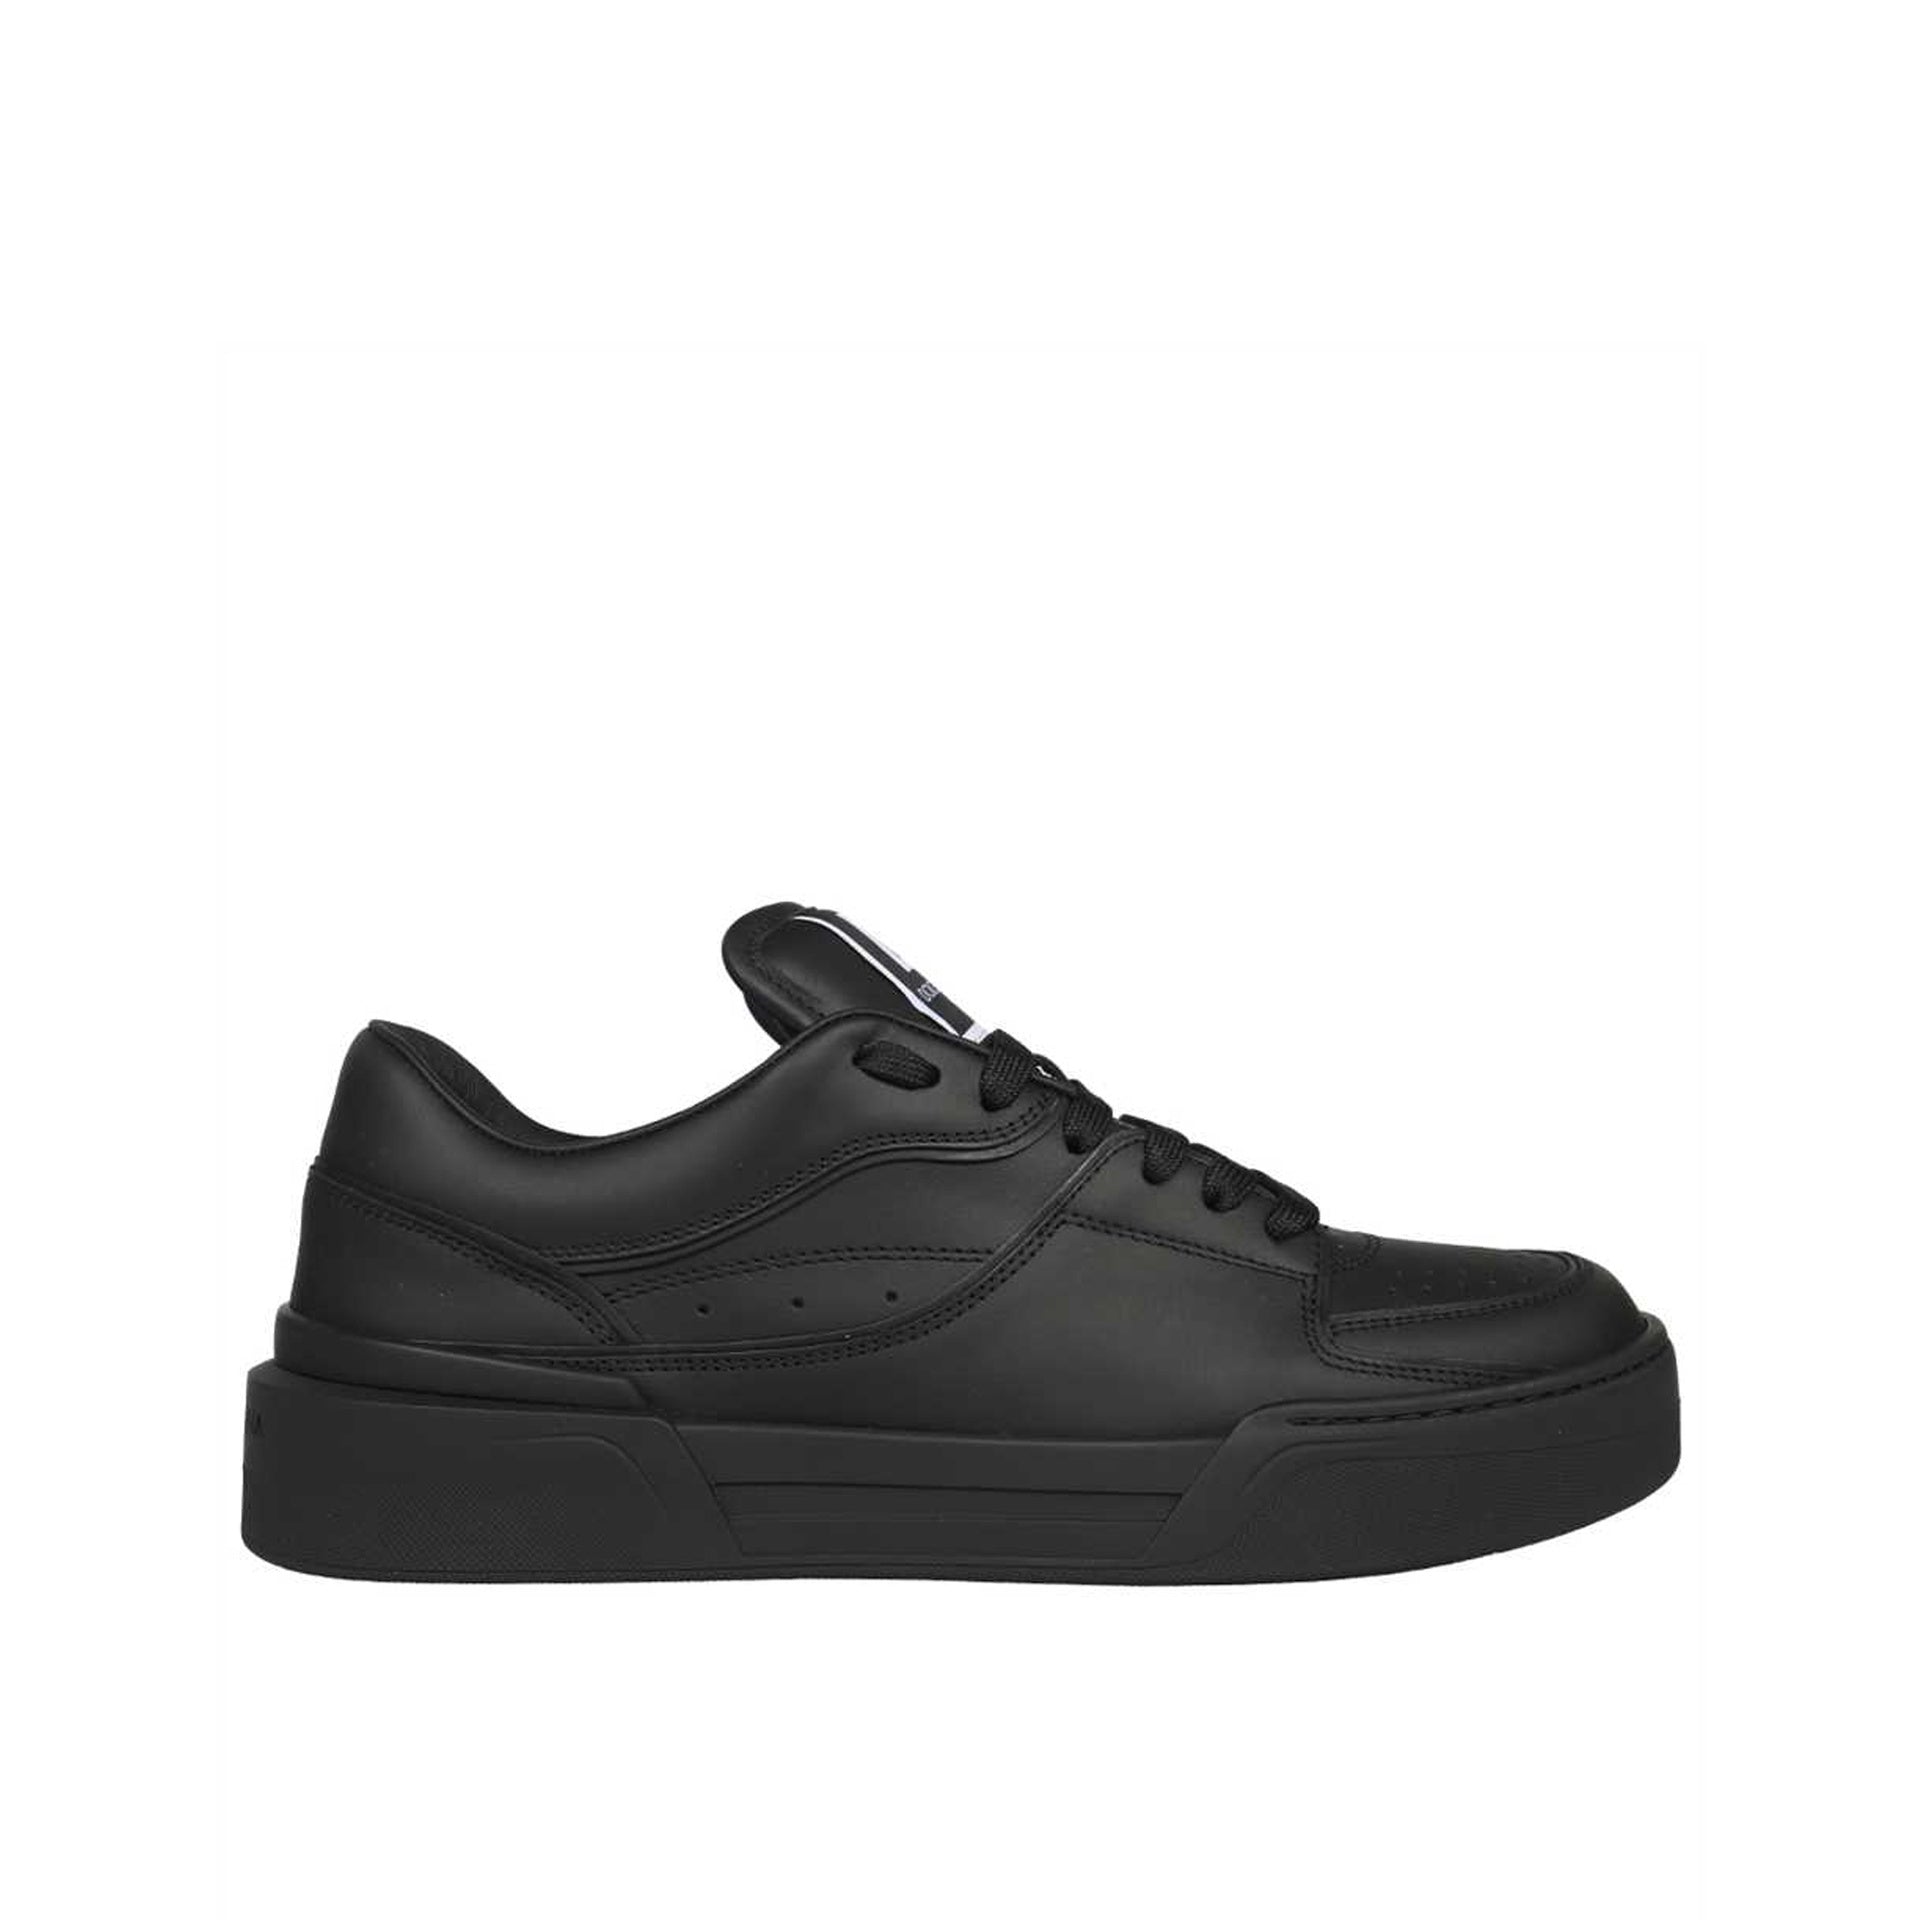 DOLCE___GABBANA_Dolce___Gabbana_Leather_Sneakers_CS2036_A1065_80999_Black_1.jpg